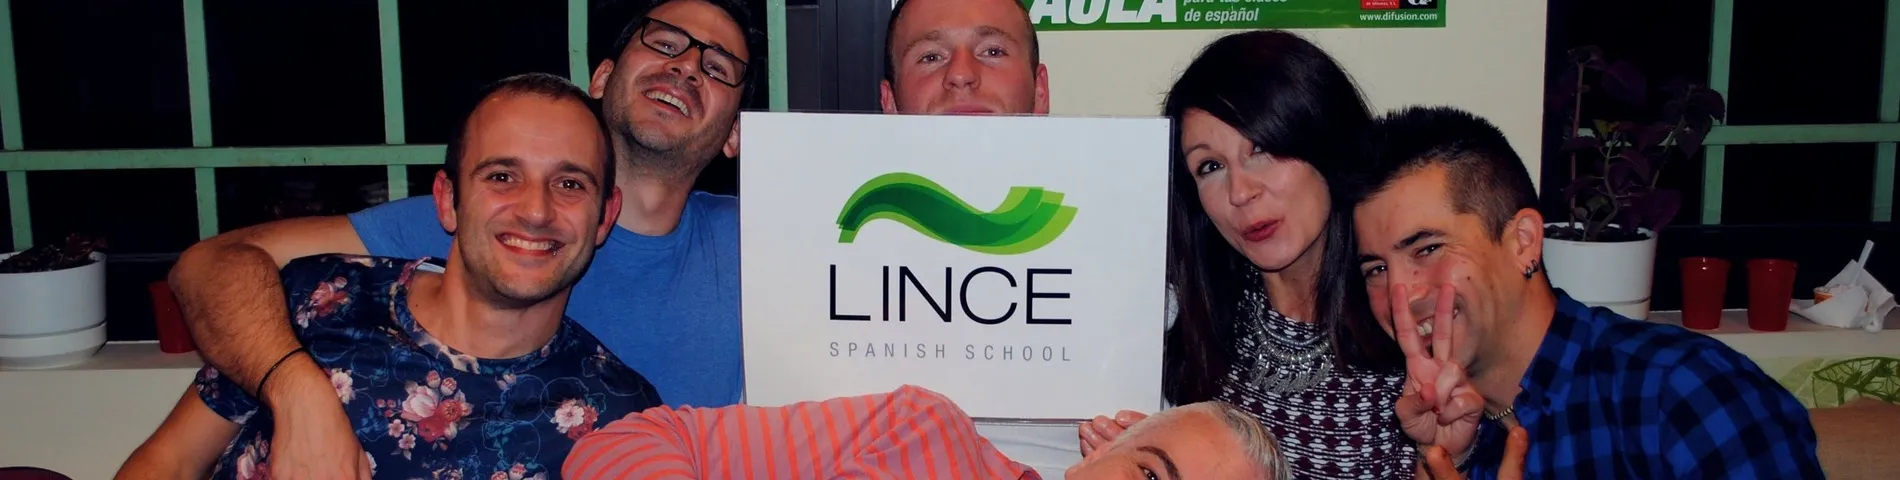 Lince Spanish School画像1